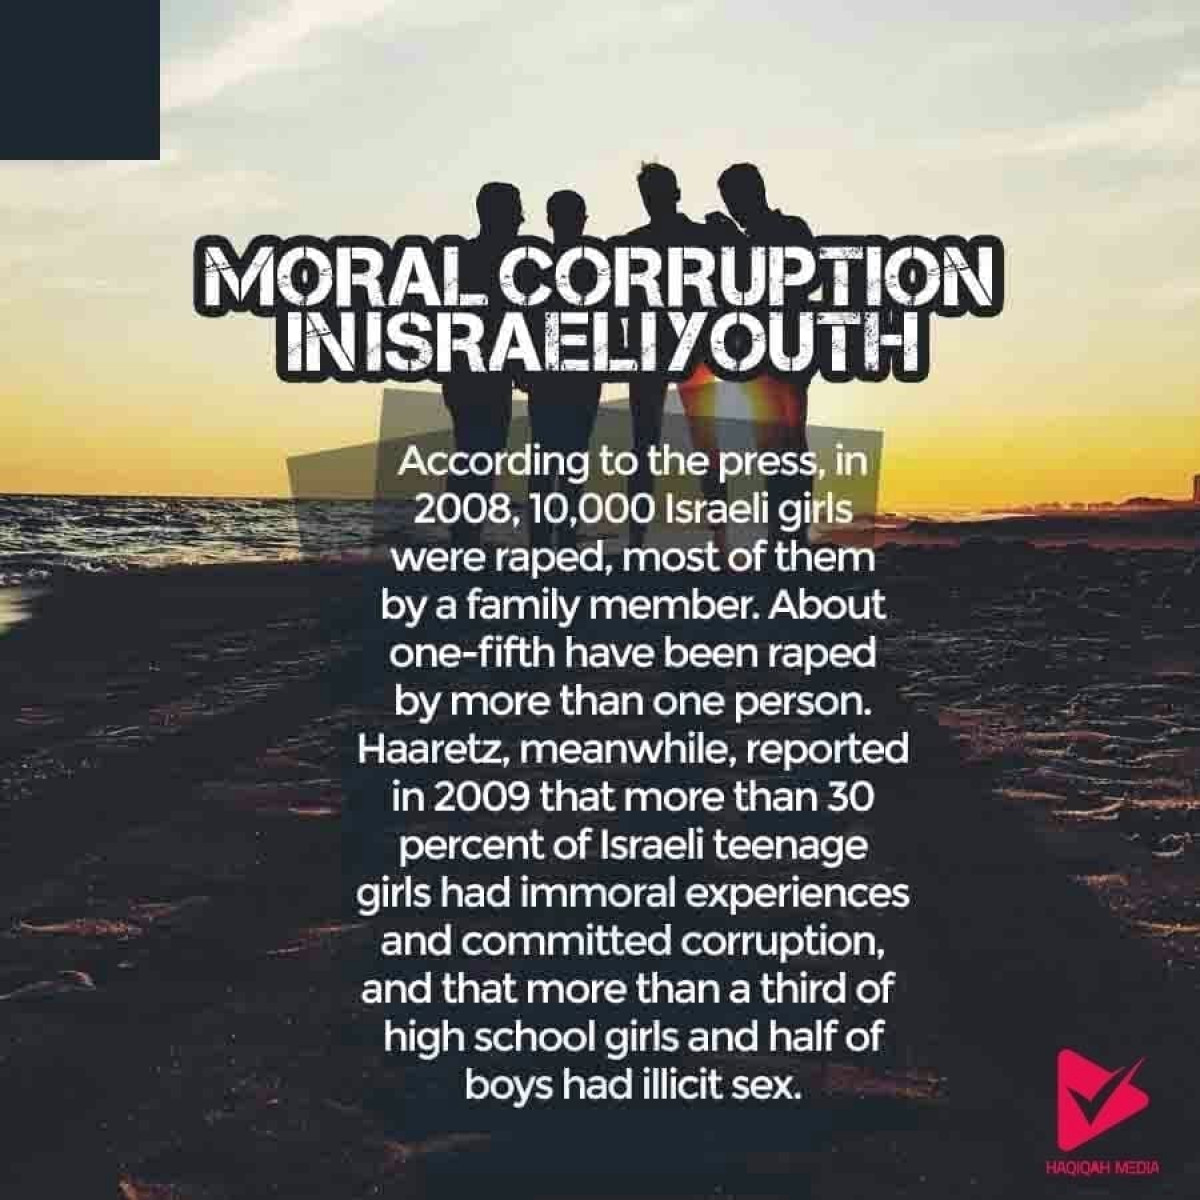 Moral corruption inidraeliyouth